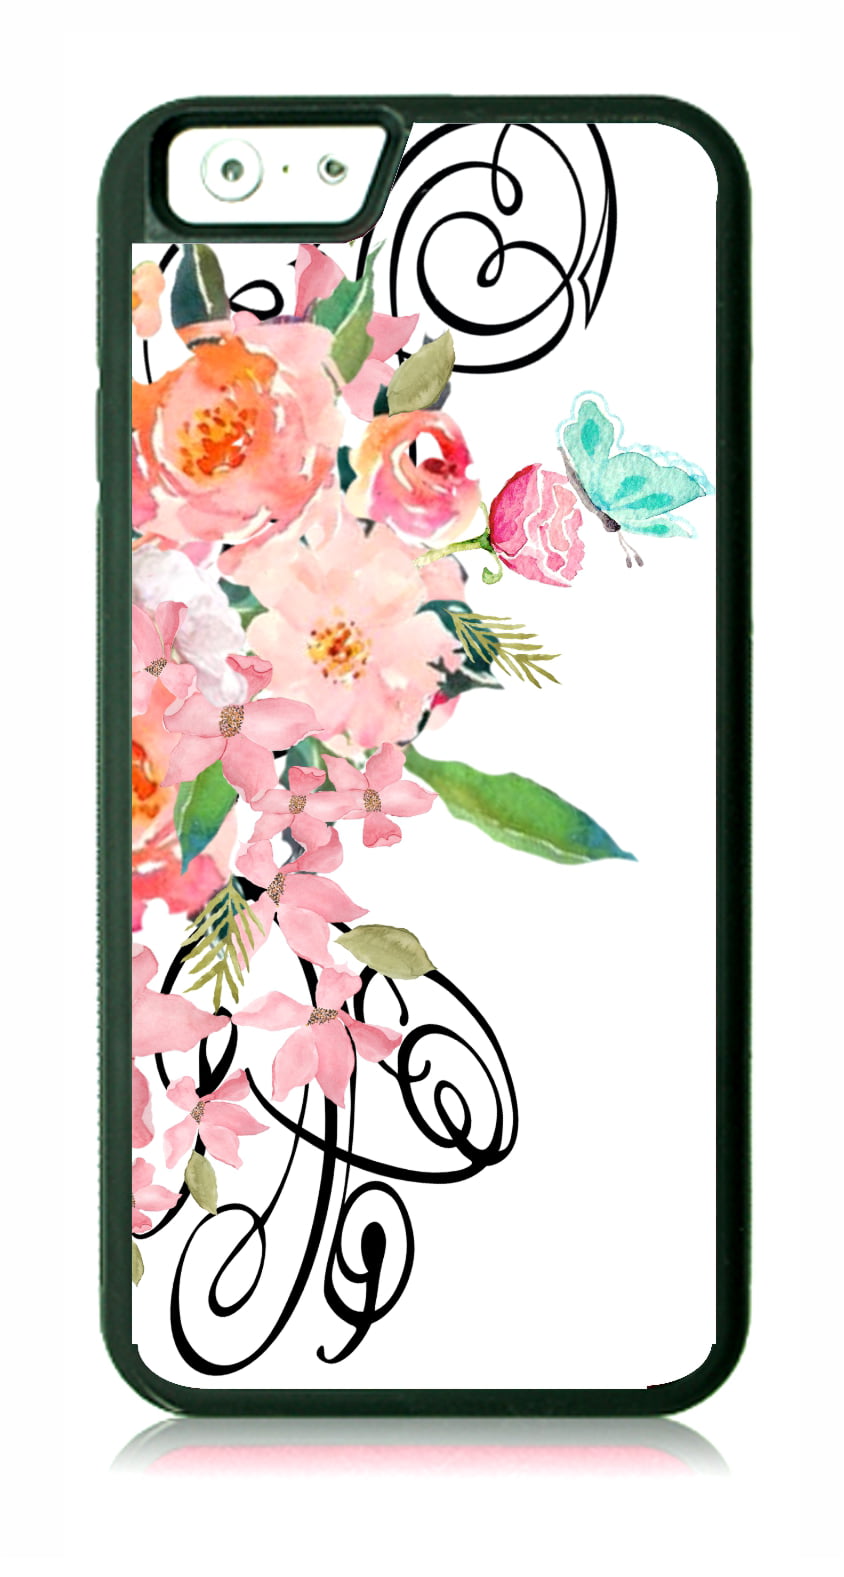 Flowers Design Black Rubber Case for the Apple iPhone 6 / iPhone 6s - iPhone 6 Accessories - iPhone 6s Accessories